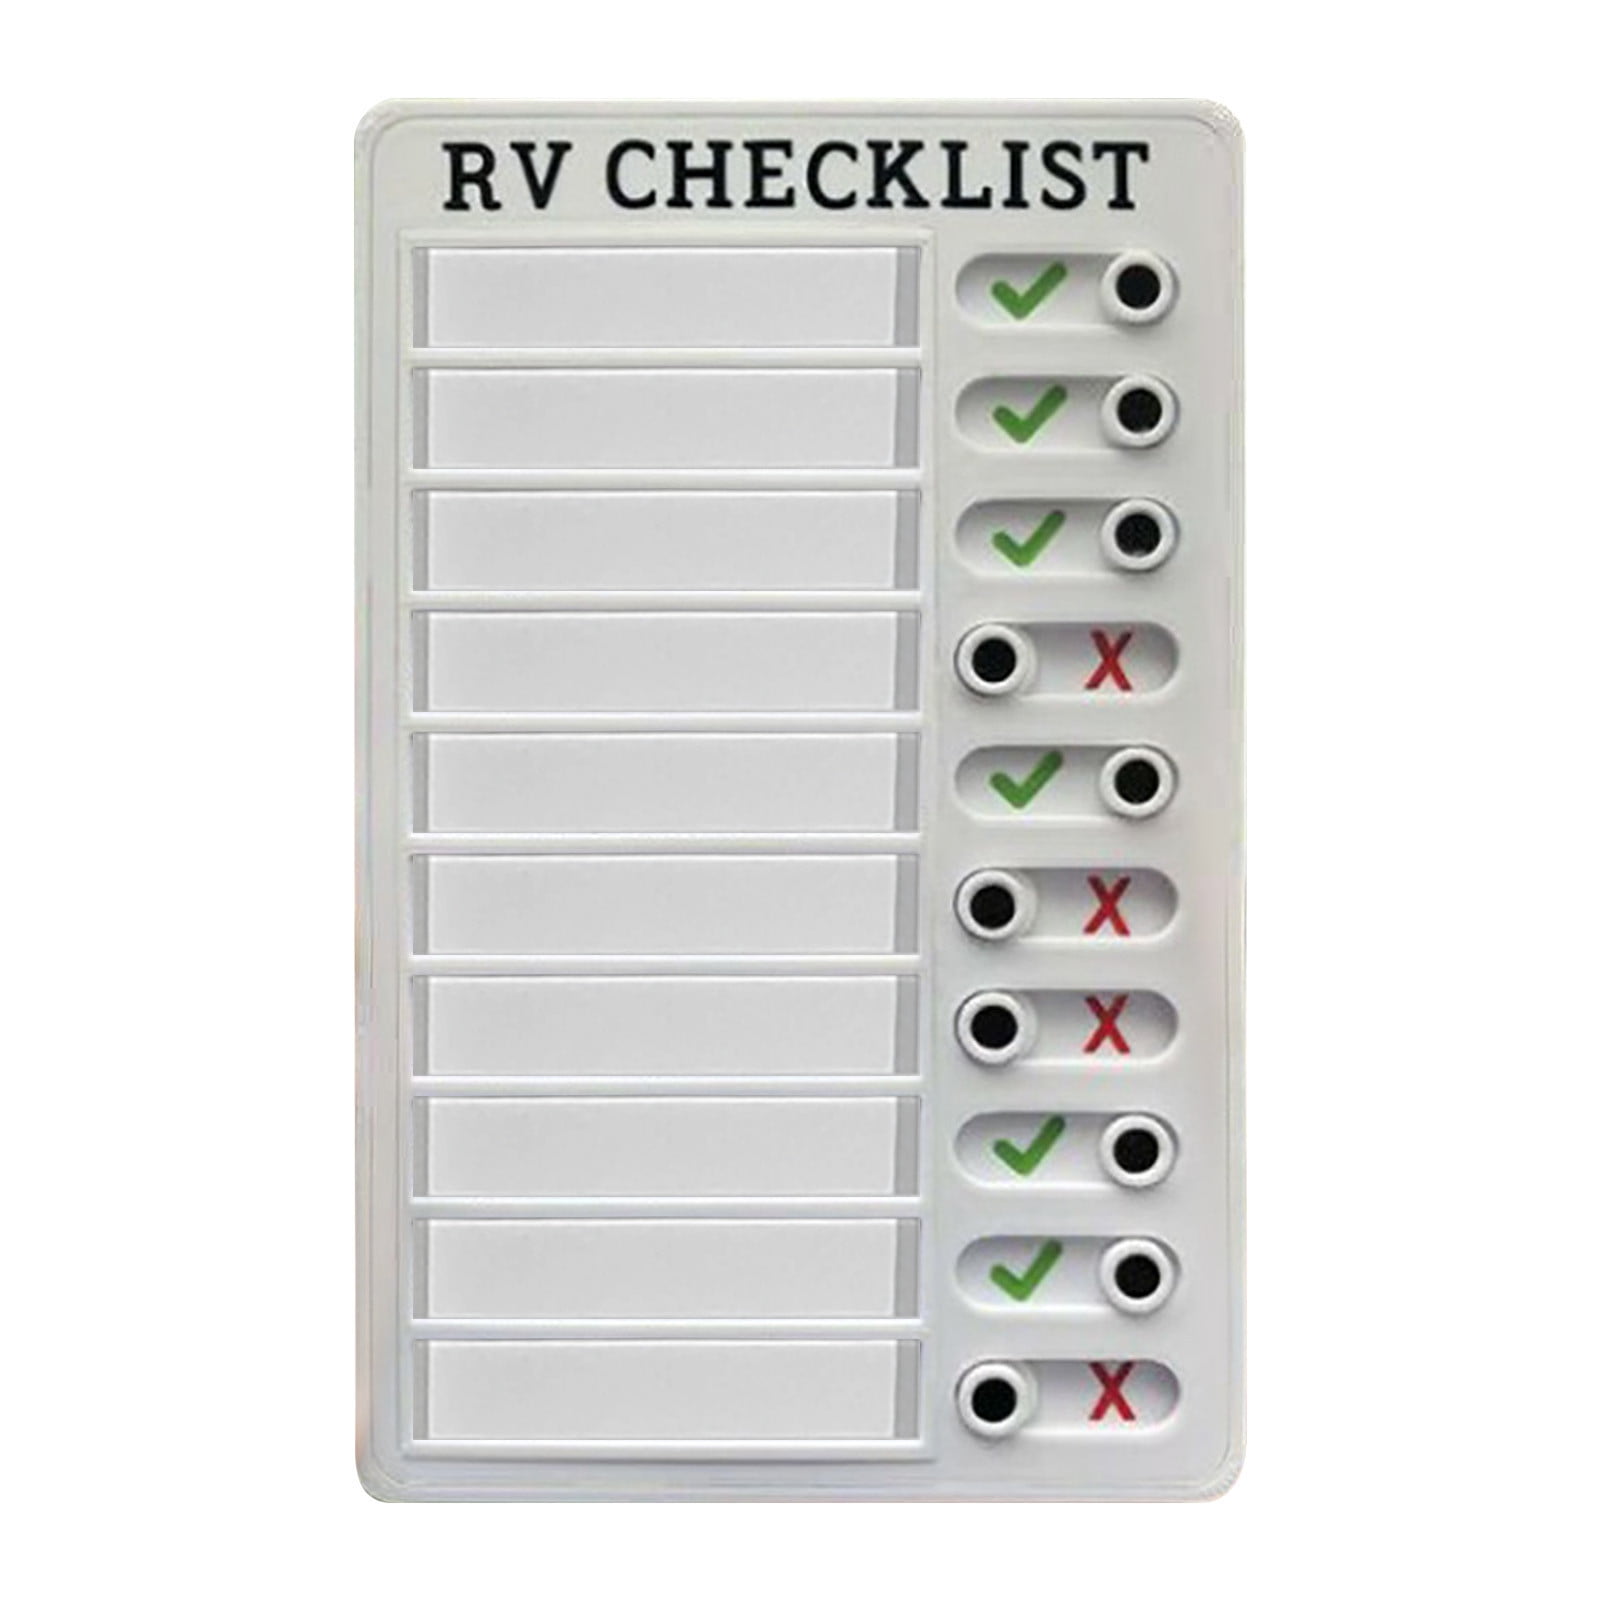 OIAGLH RV Checklist Memo Plastic Board, Detachable and Reusable Creative Memo  Checklist for Check Items and Form 